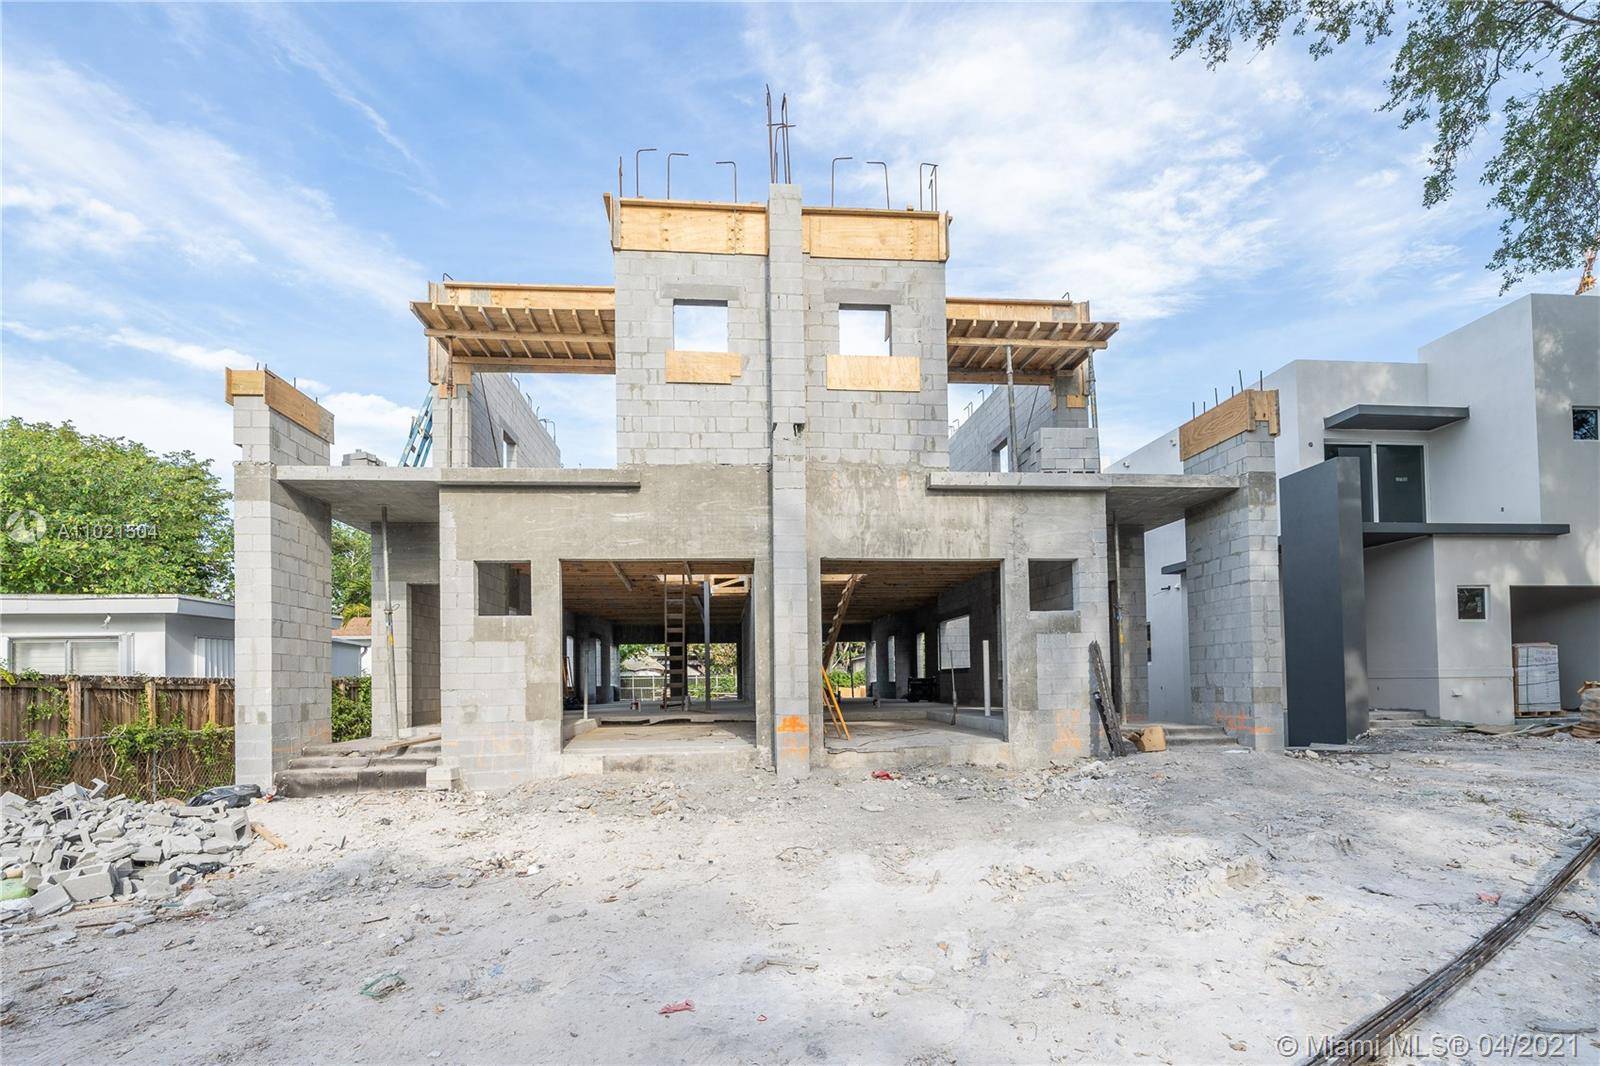 Beautiful modern New Construction Townhome near the highly desirable Coconut Grove Neighborhood.